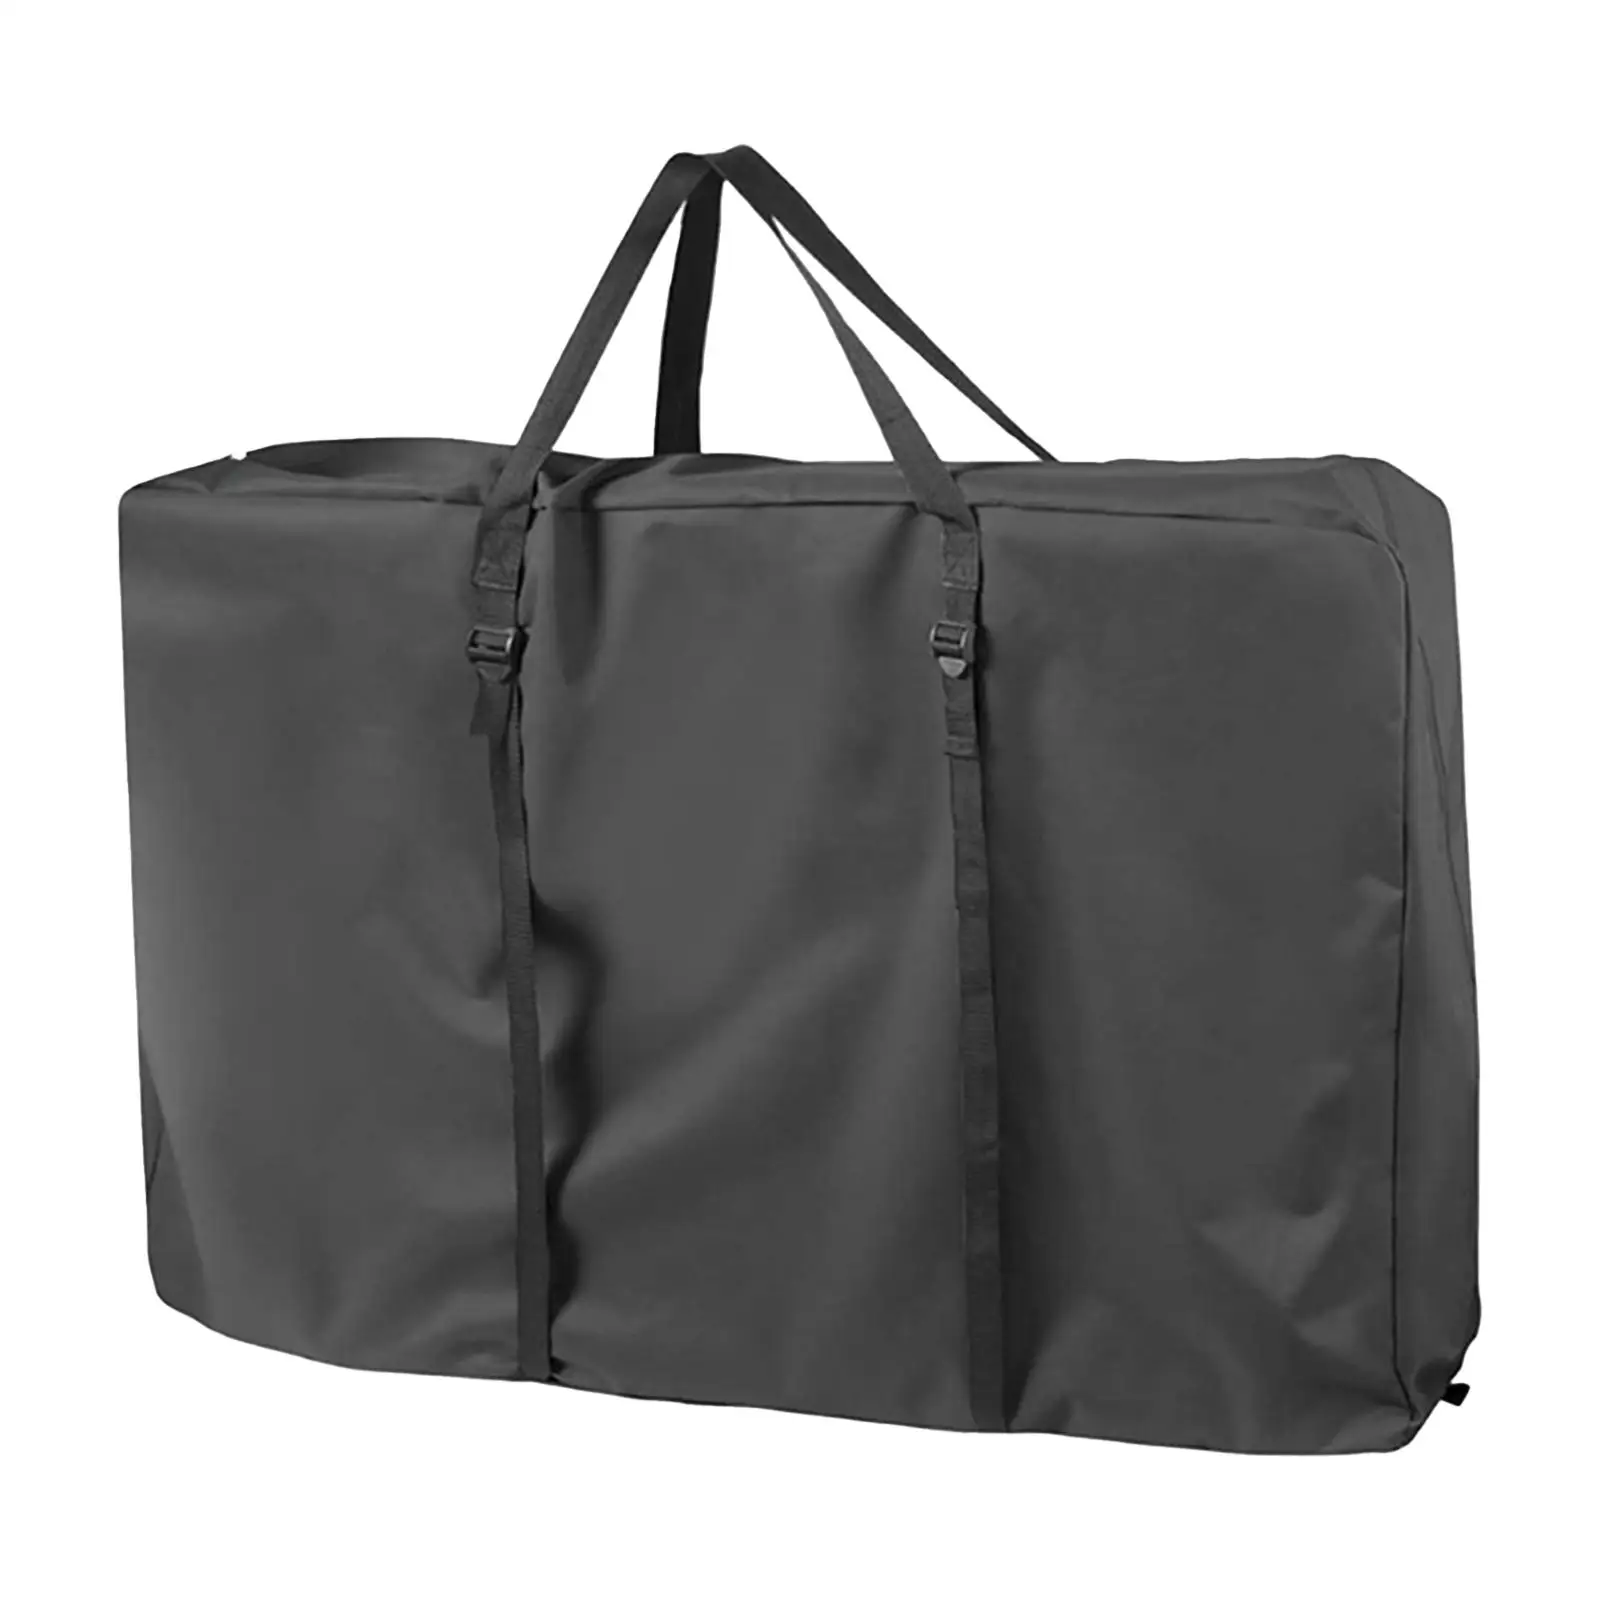 Bag for Wheelchair Transport Bag Travel Organiser for Folding Chair 110cmx74cmx28cm Storage Bike Travel Bag Folding Carry Bag